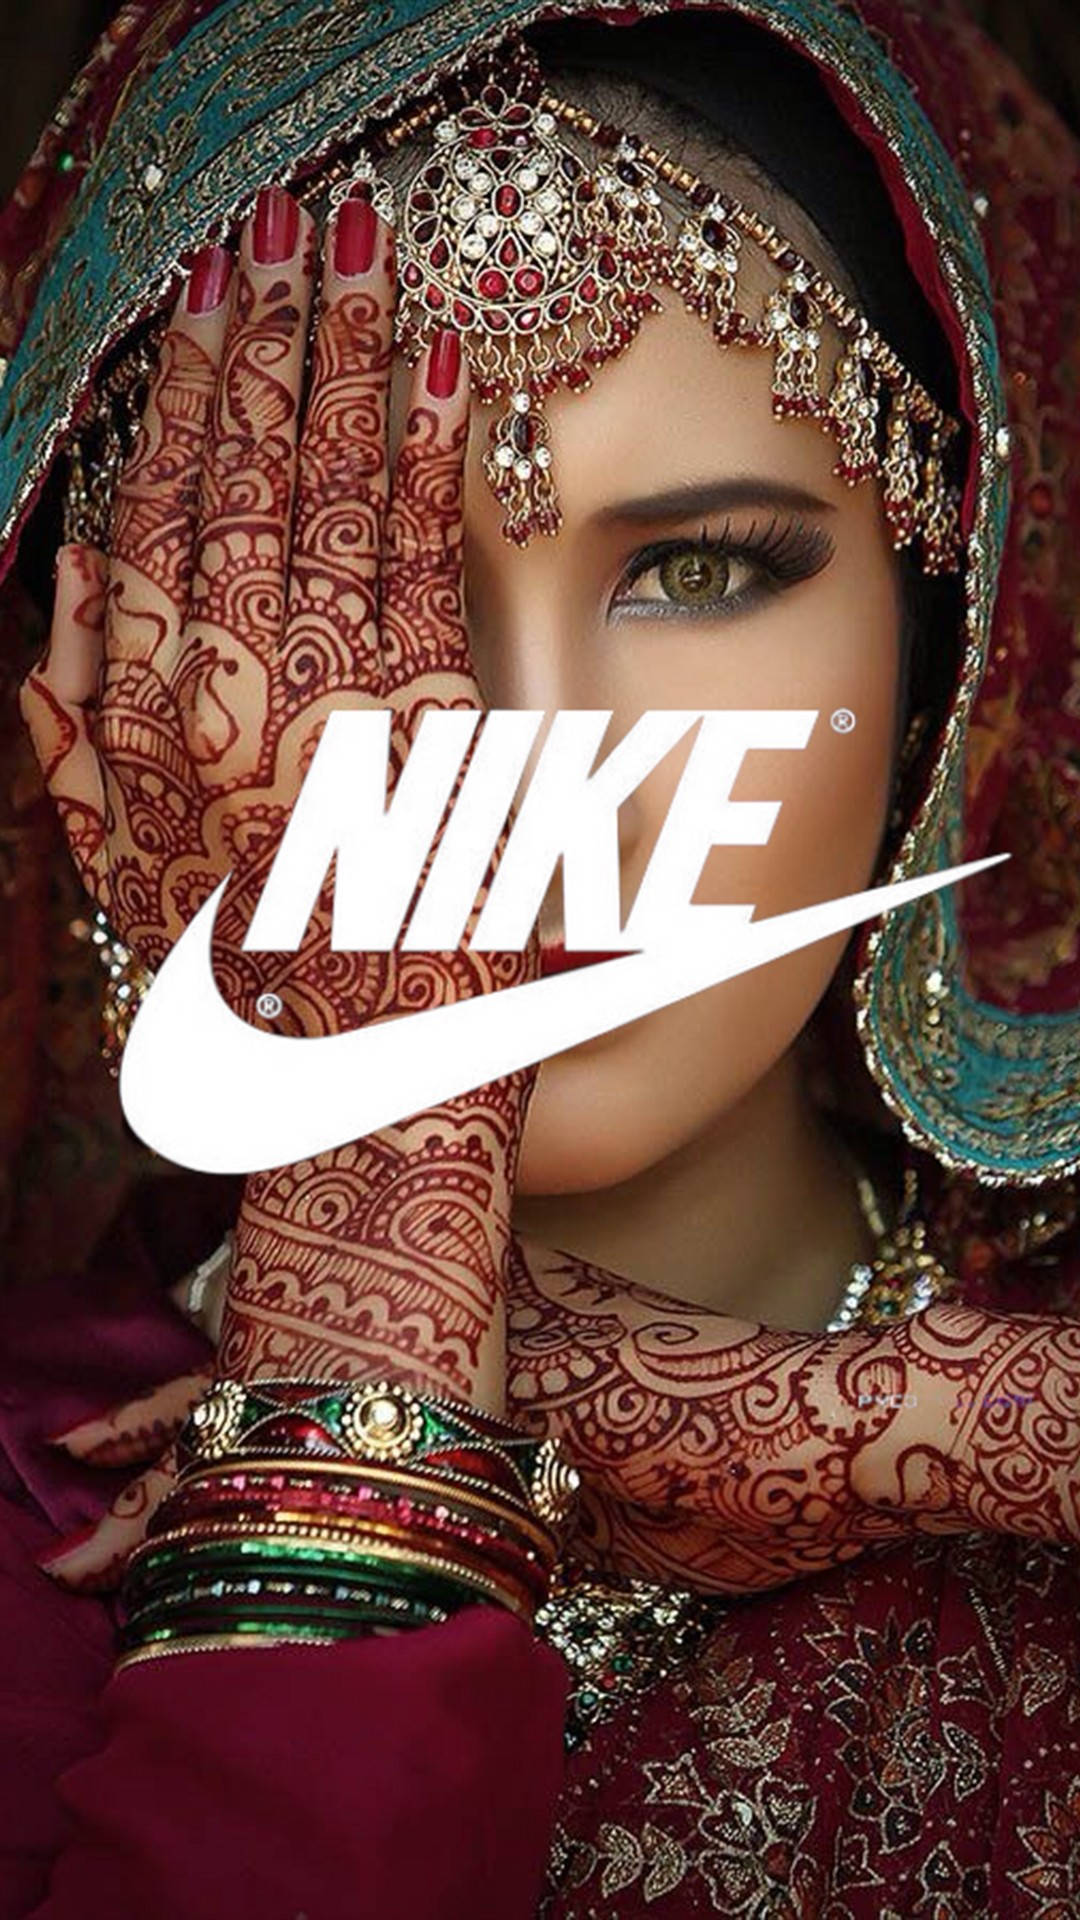 Bakgrundsbild Med En Indisk Kvinna I Nikekläder. Wallpaper